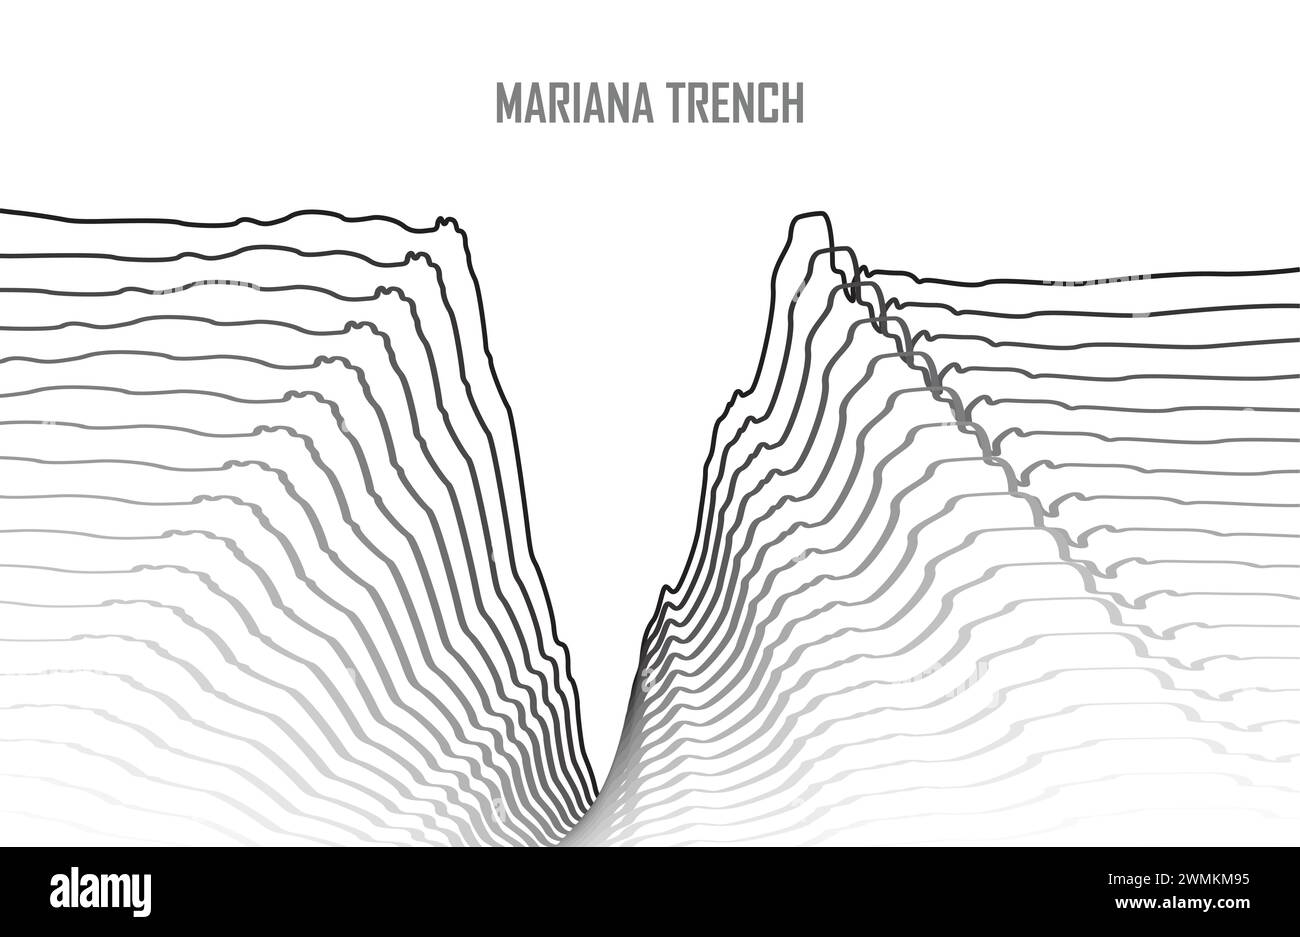 Vector silhouette mariana trench underwater sea line art illustration Stock Vector